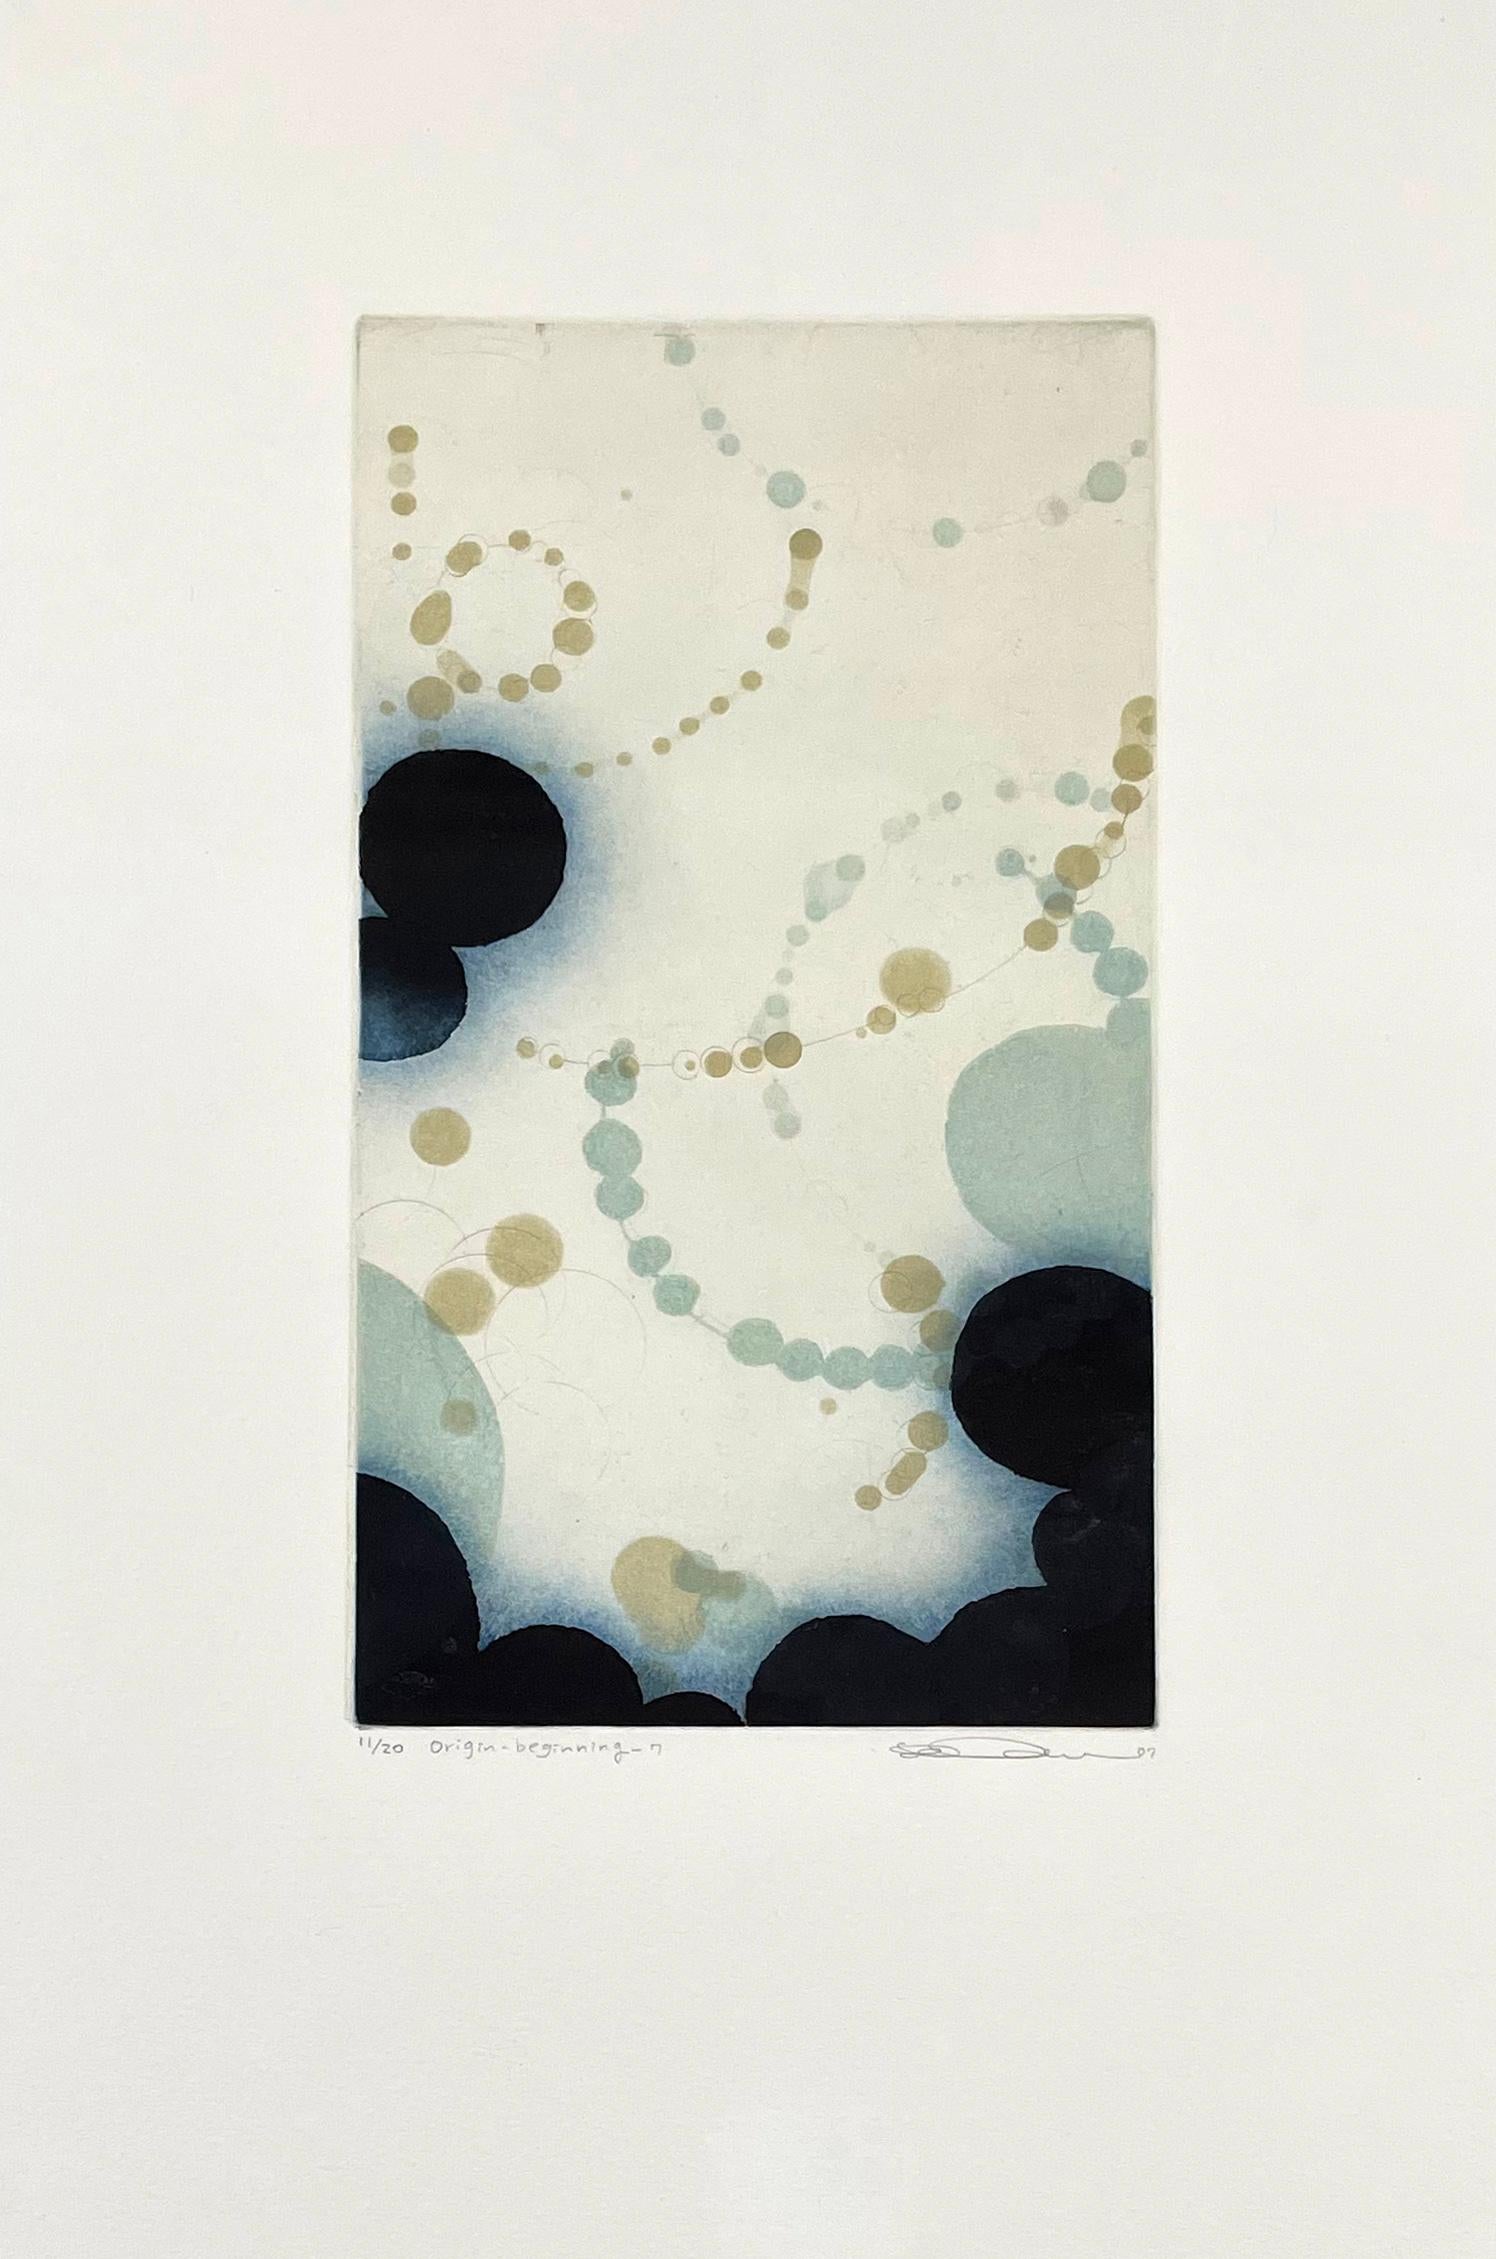 Origin-Beginning-7 (4/20) - Print by Seiko Tachibana